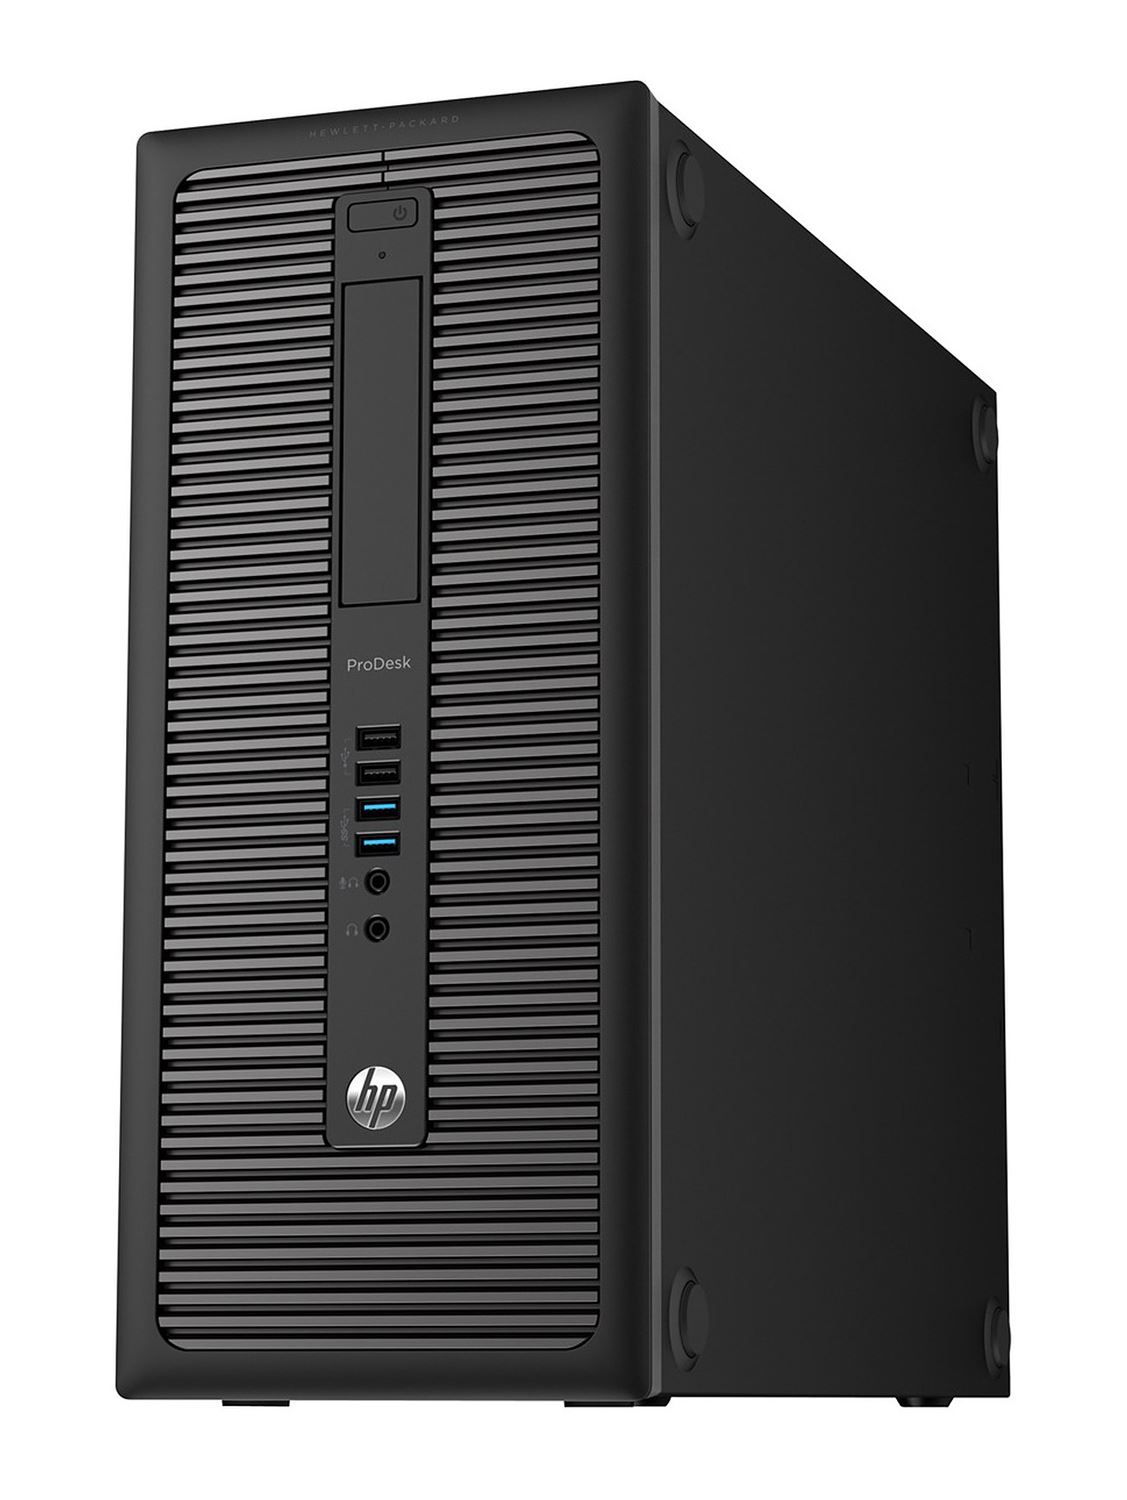 HP PC ProDesk 600 G1 TWR, i5-4570, 4/500GB, DVD, REF SQR - HP 115483